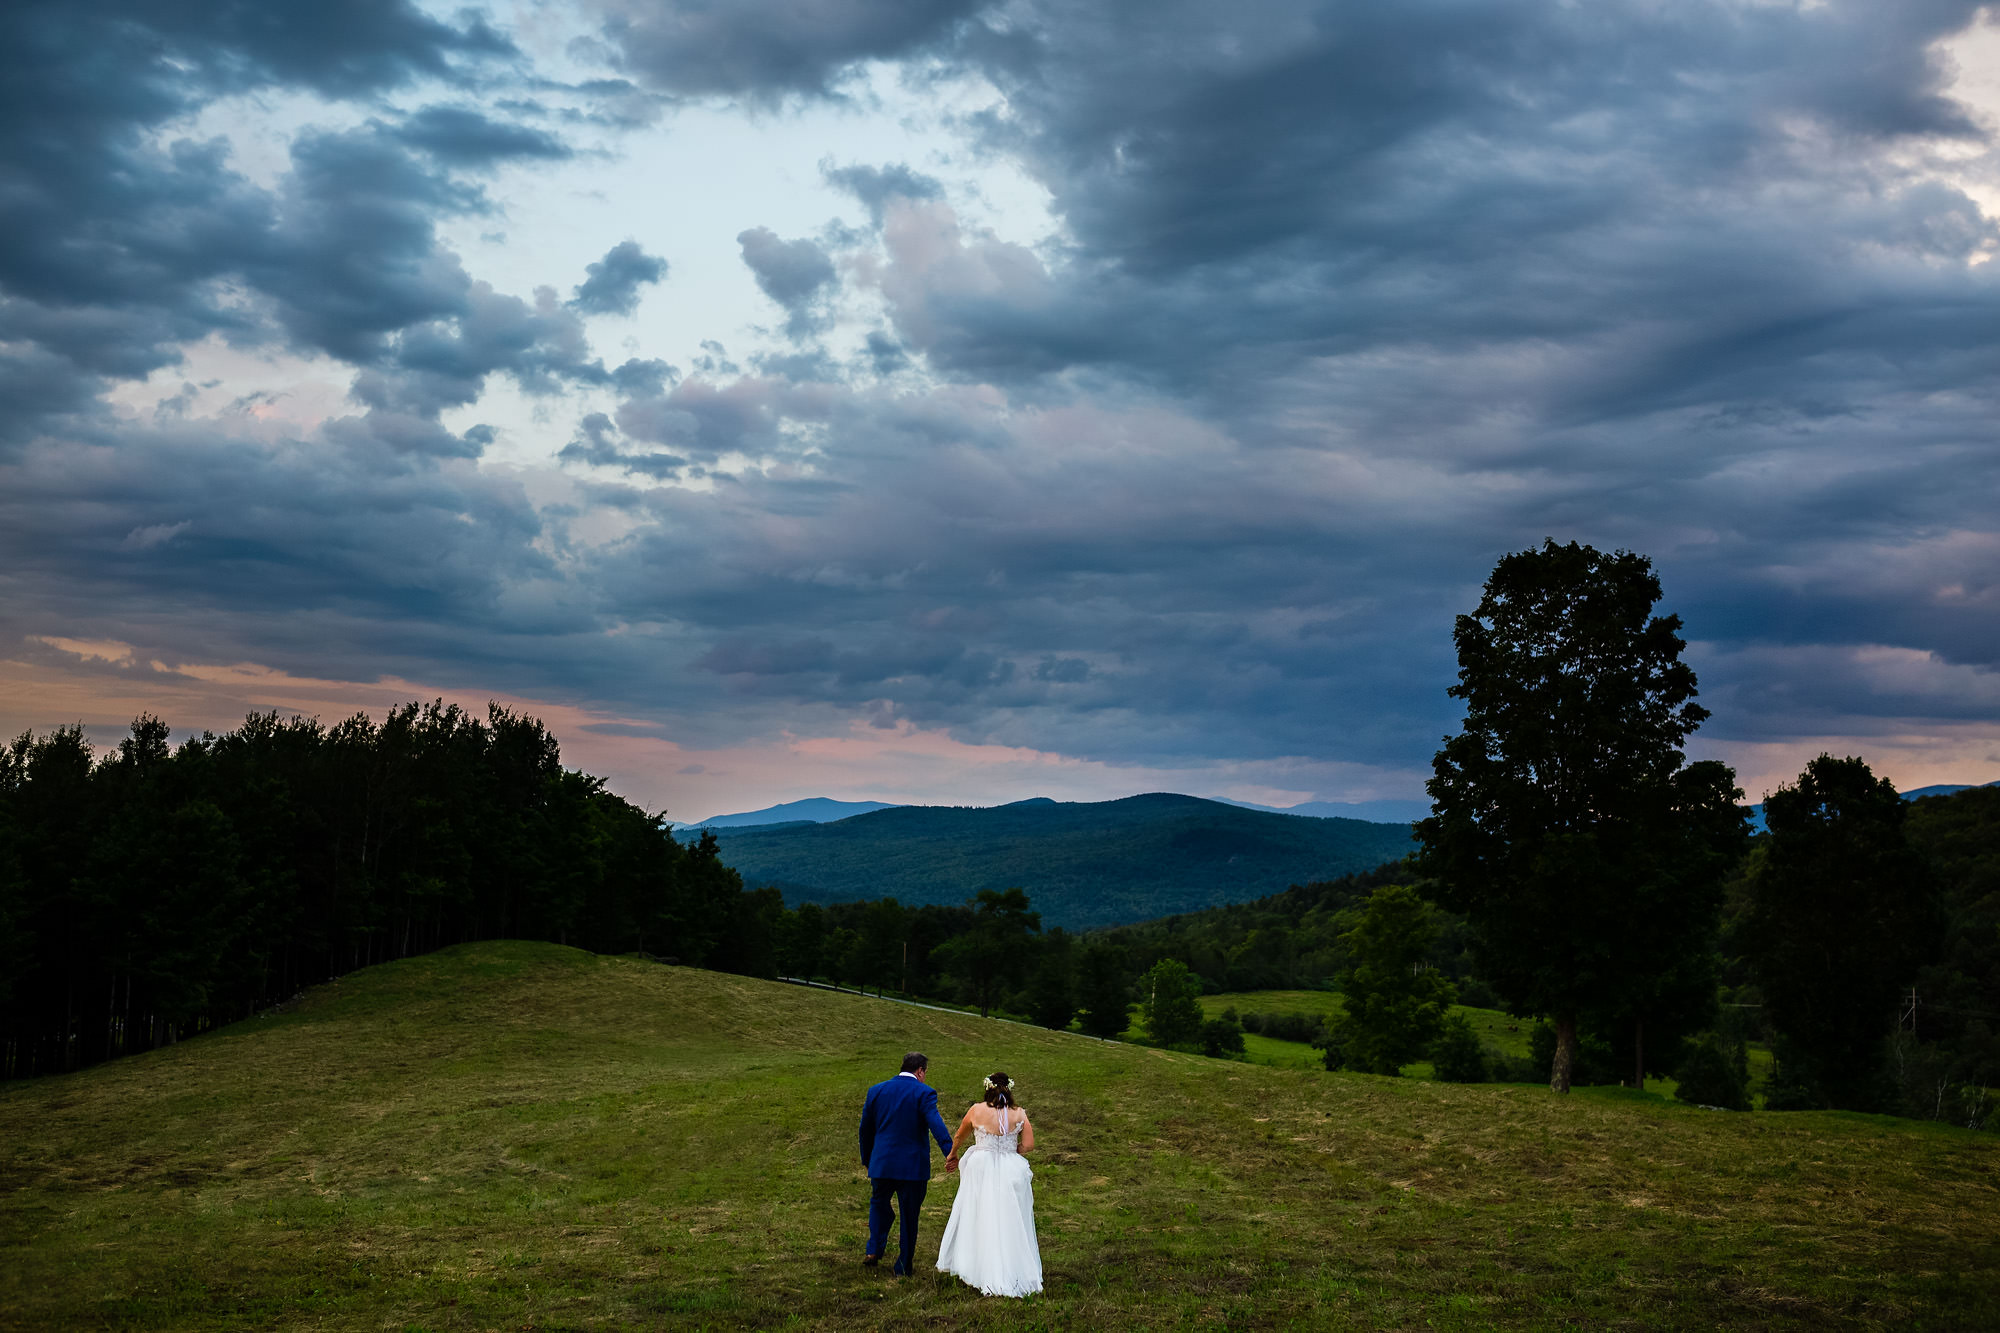 Enjoying a beautiful sunset at a Sugar Hill, New Hampshire wedding